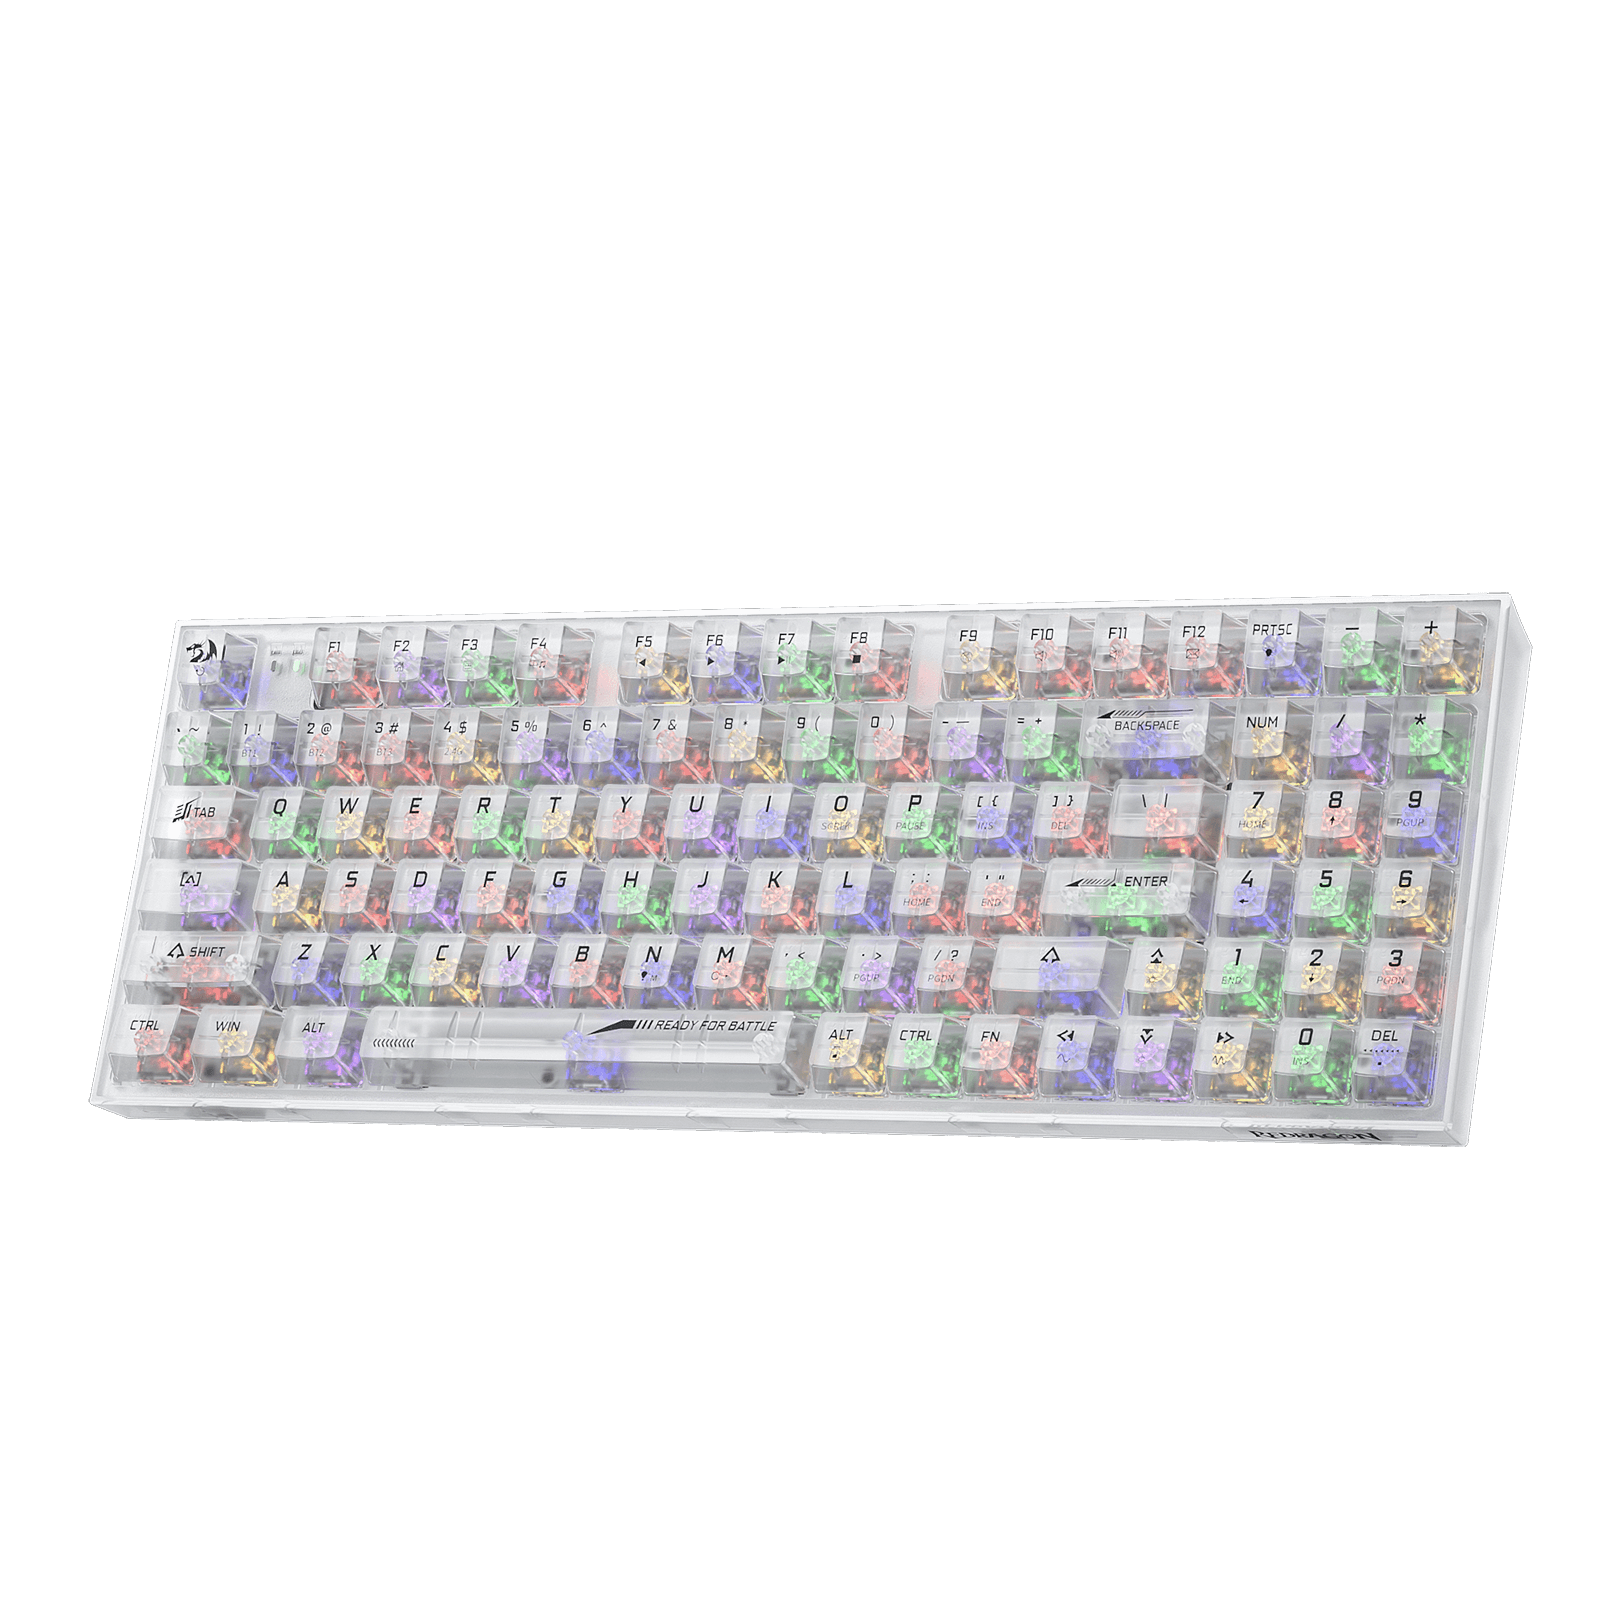 94 Keys Full-Transparent Hot-Swap Mechanical Keyboard w/Upgraded Socket